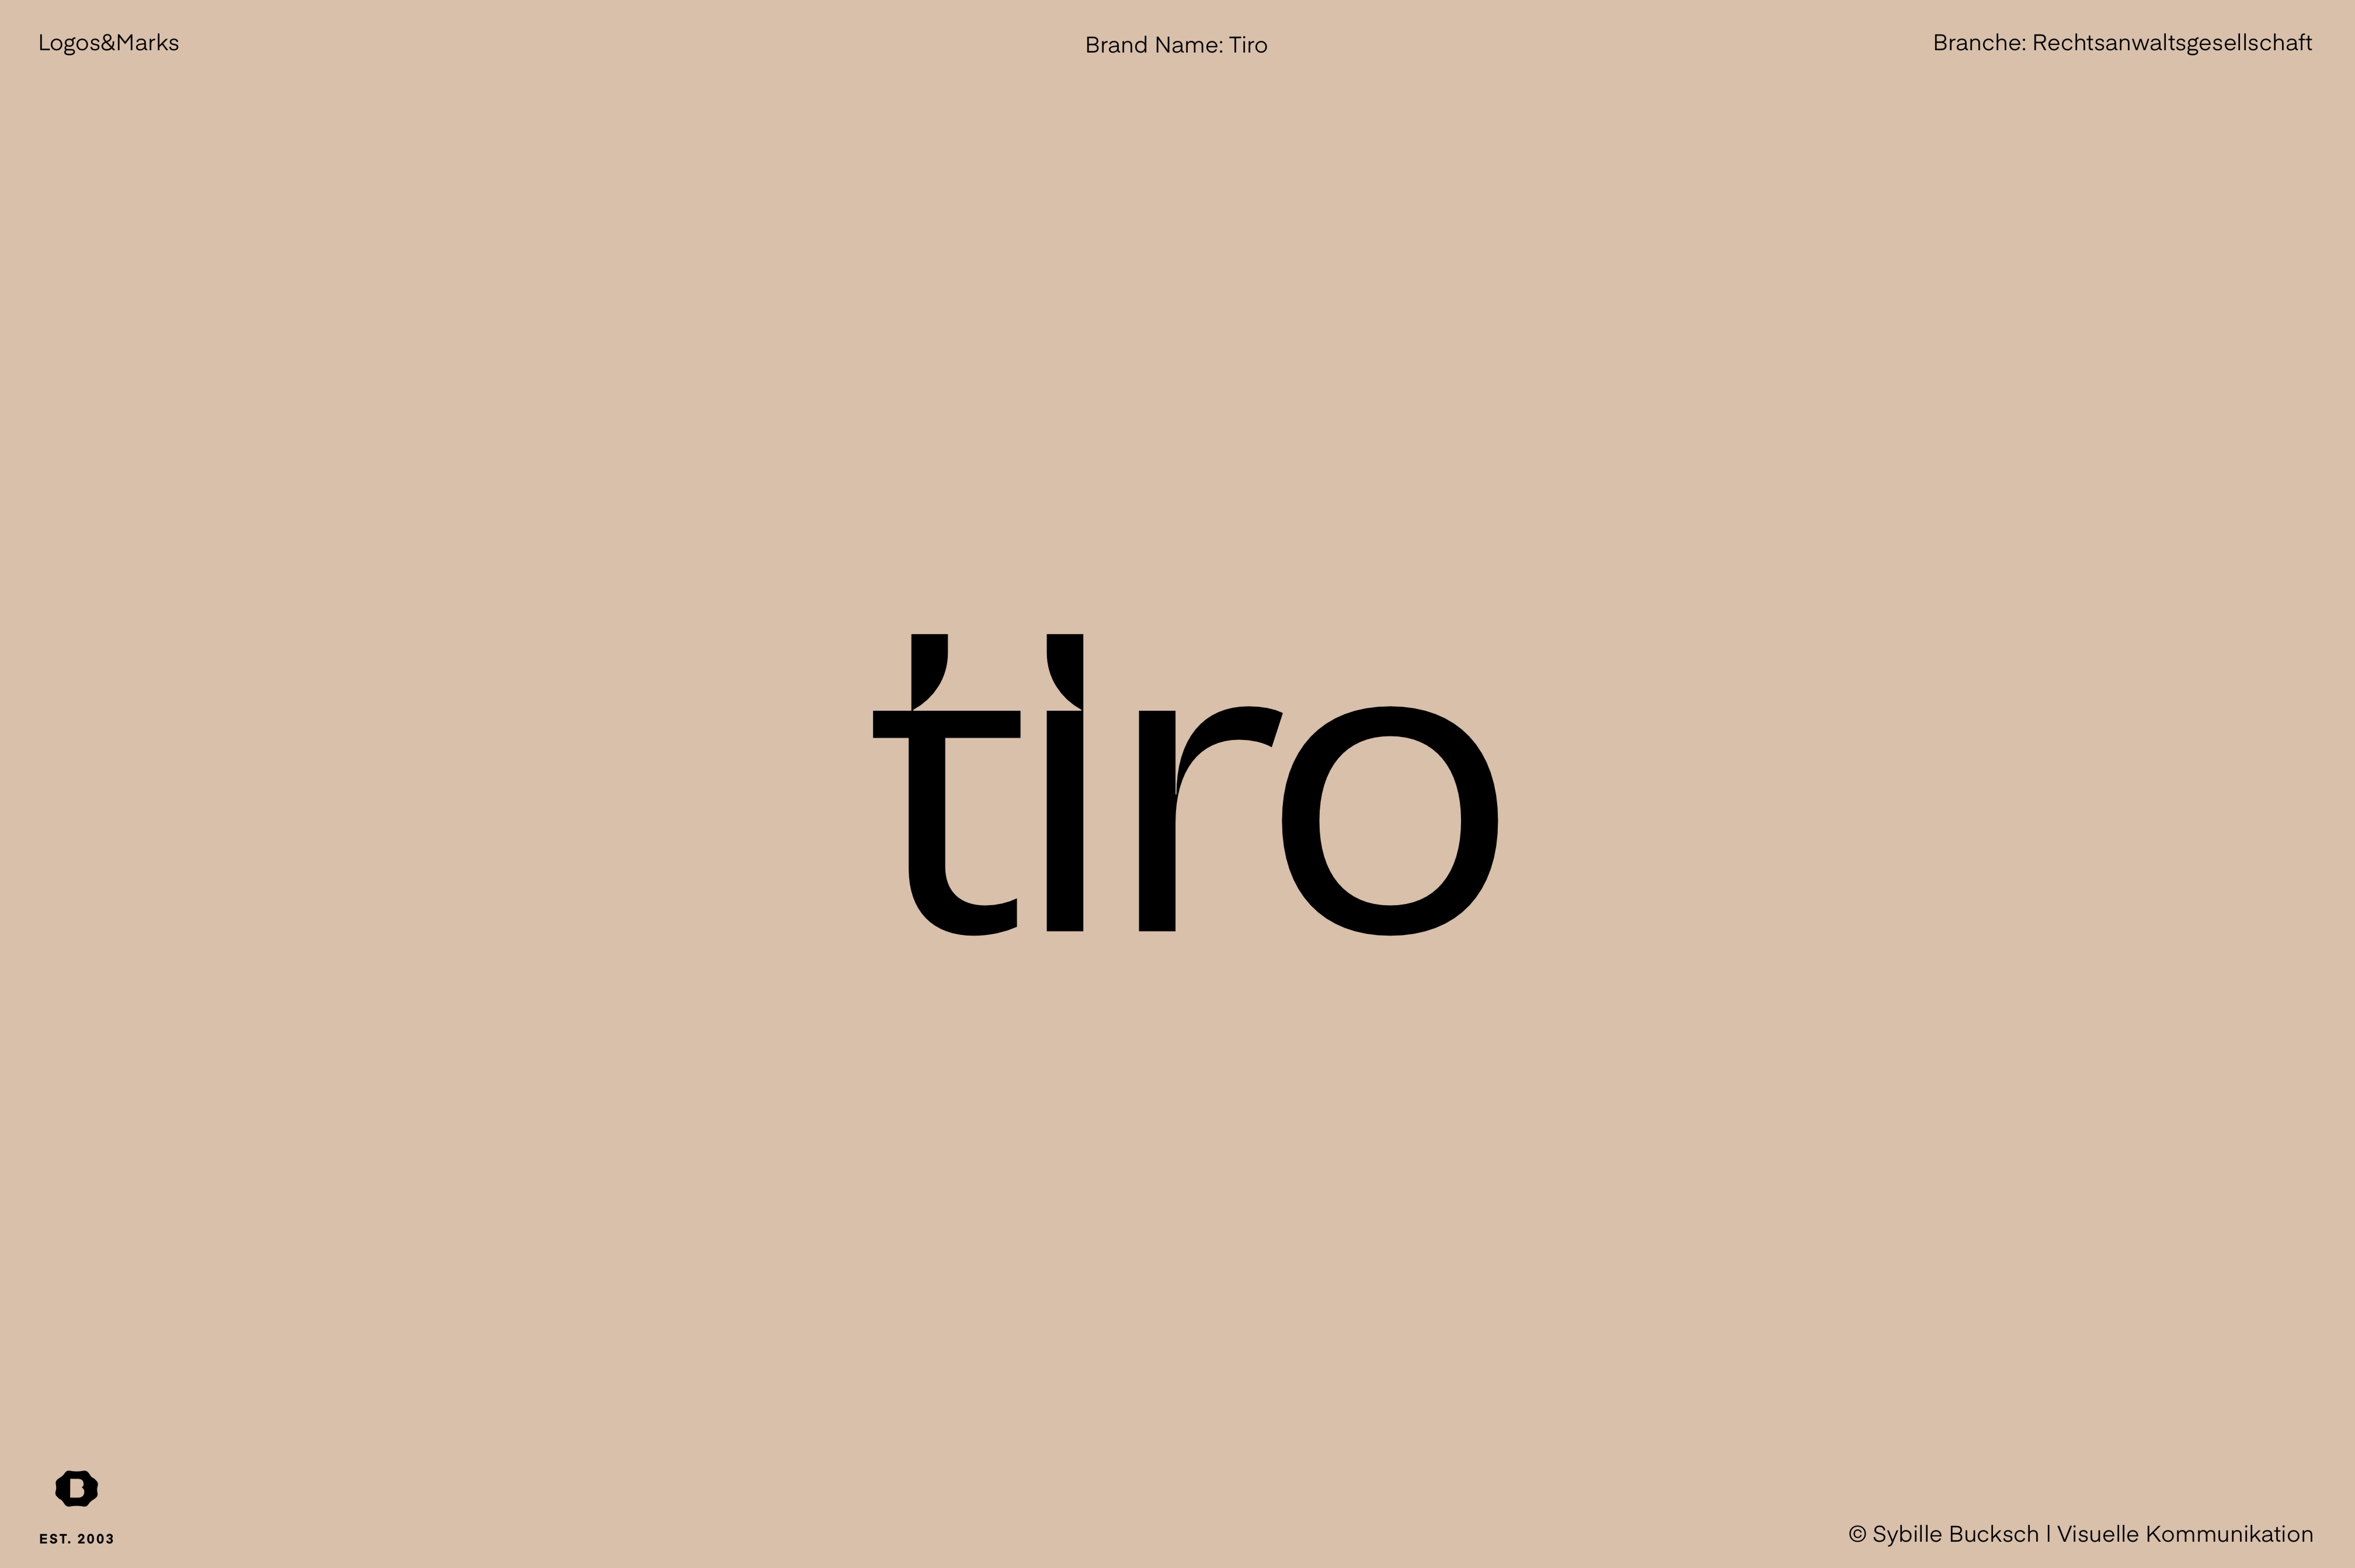 Tiro SAS | Französische Rechtsanwaltsgesellschaft